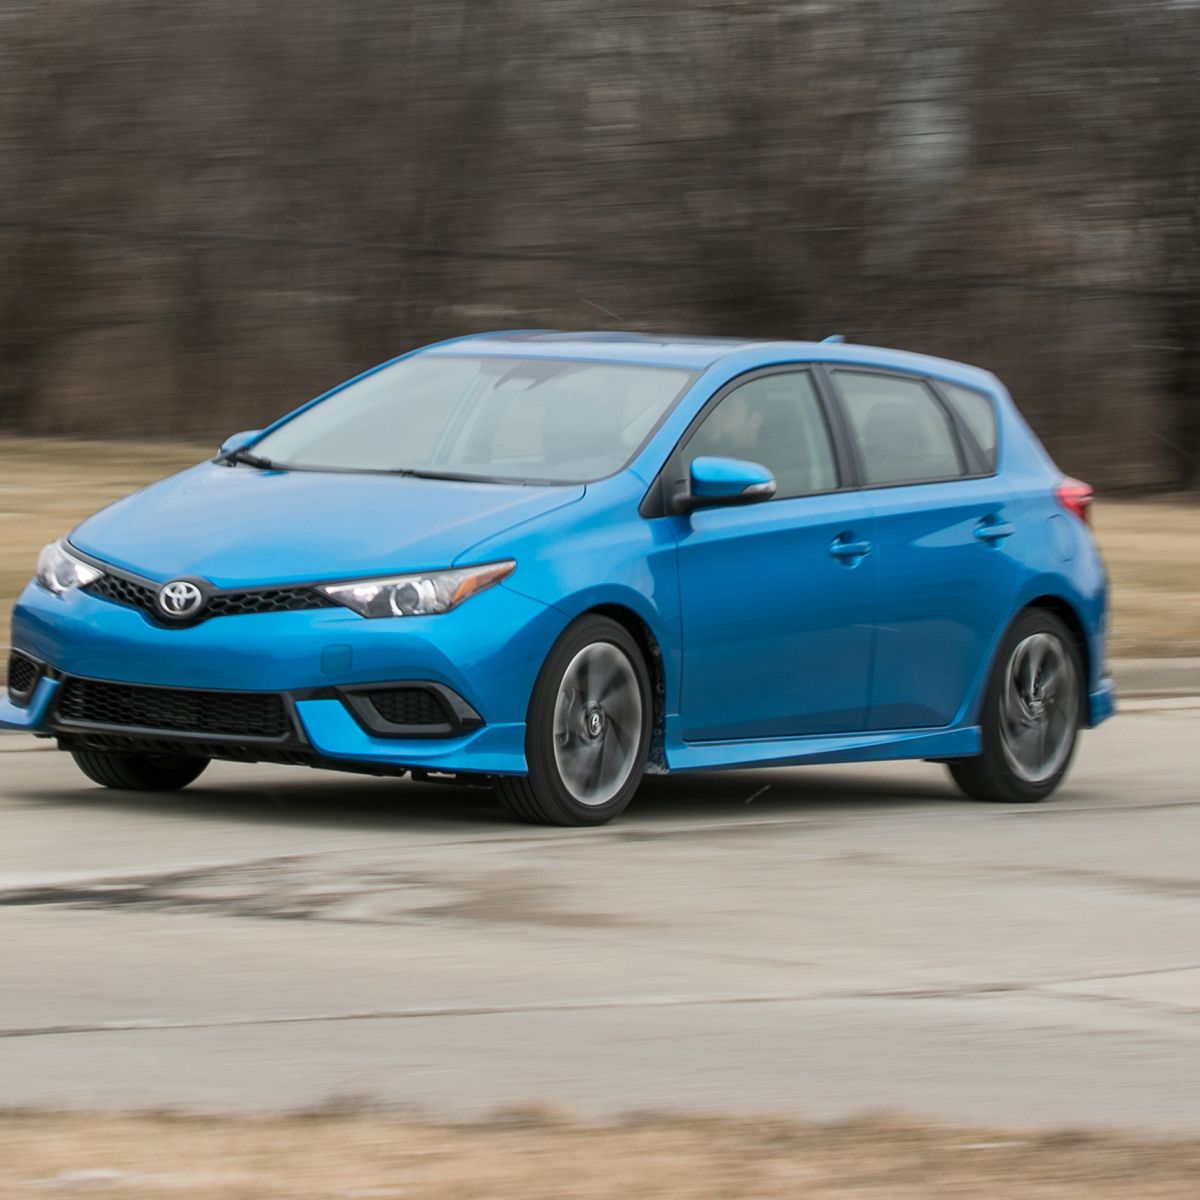 Toyota Auris, Reviews, Test Drives